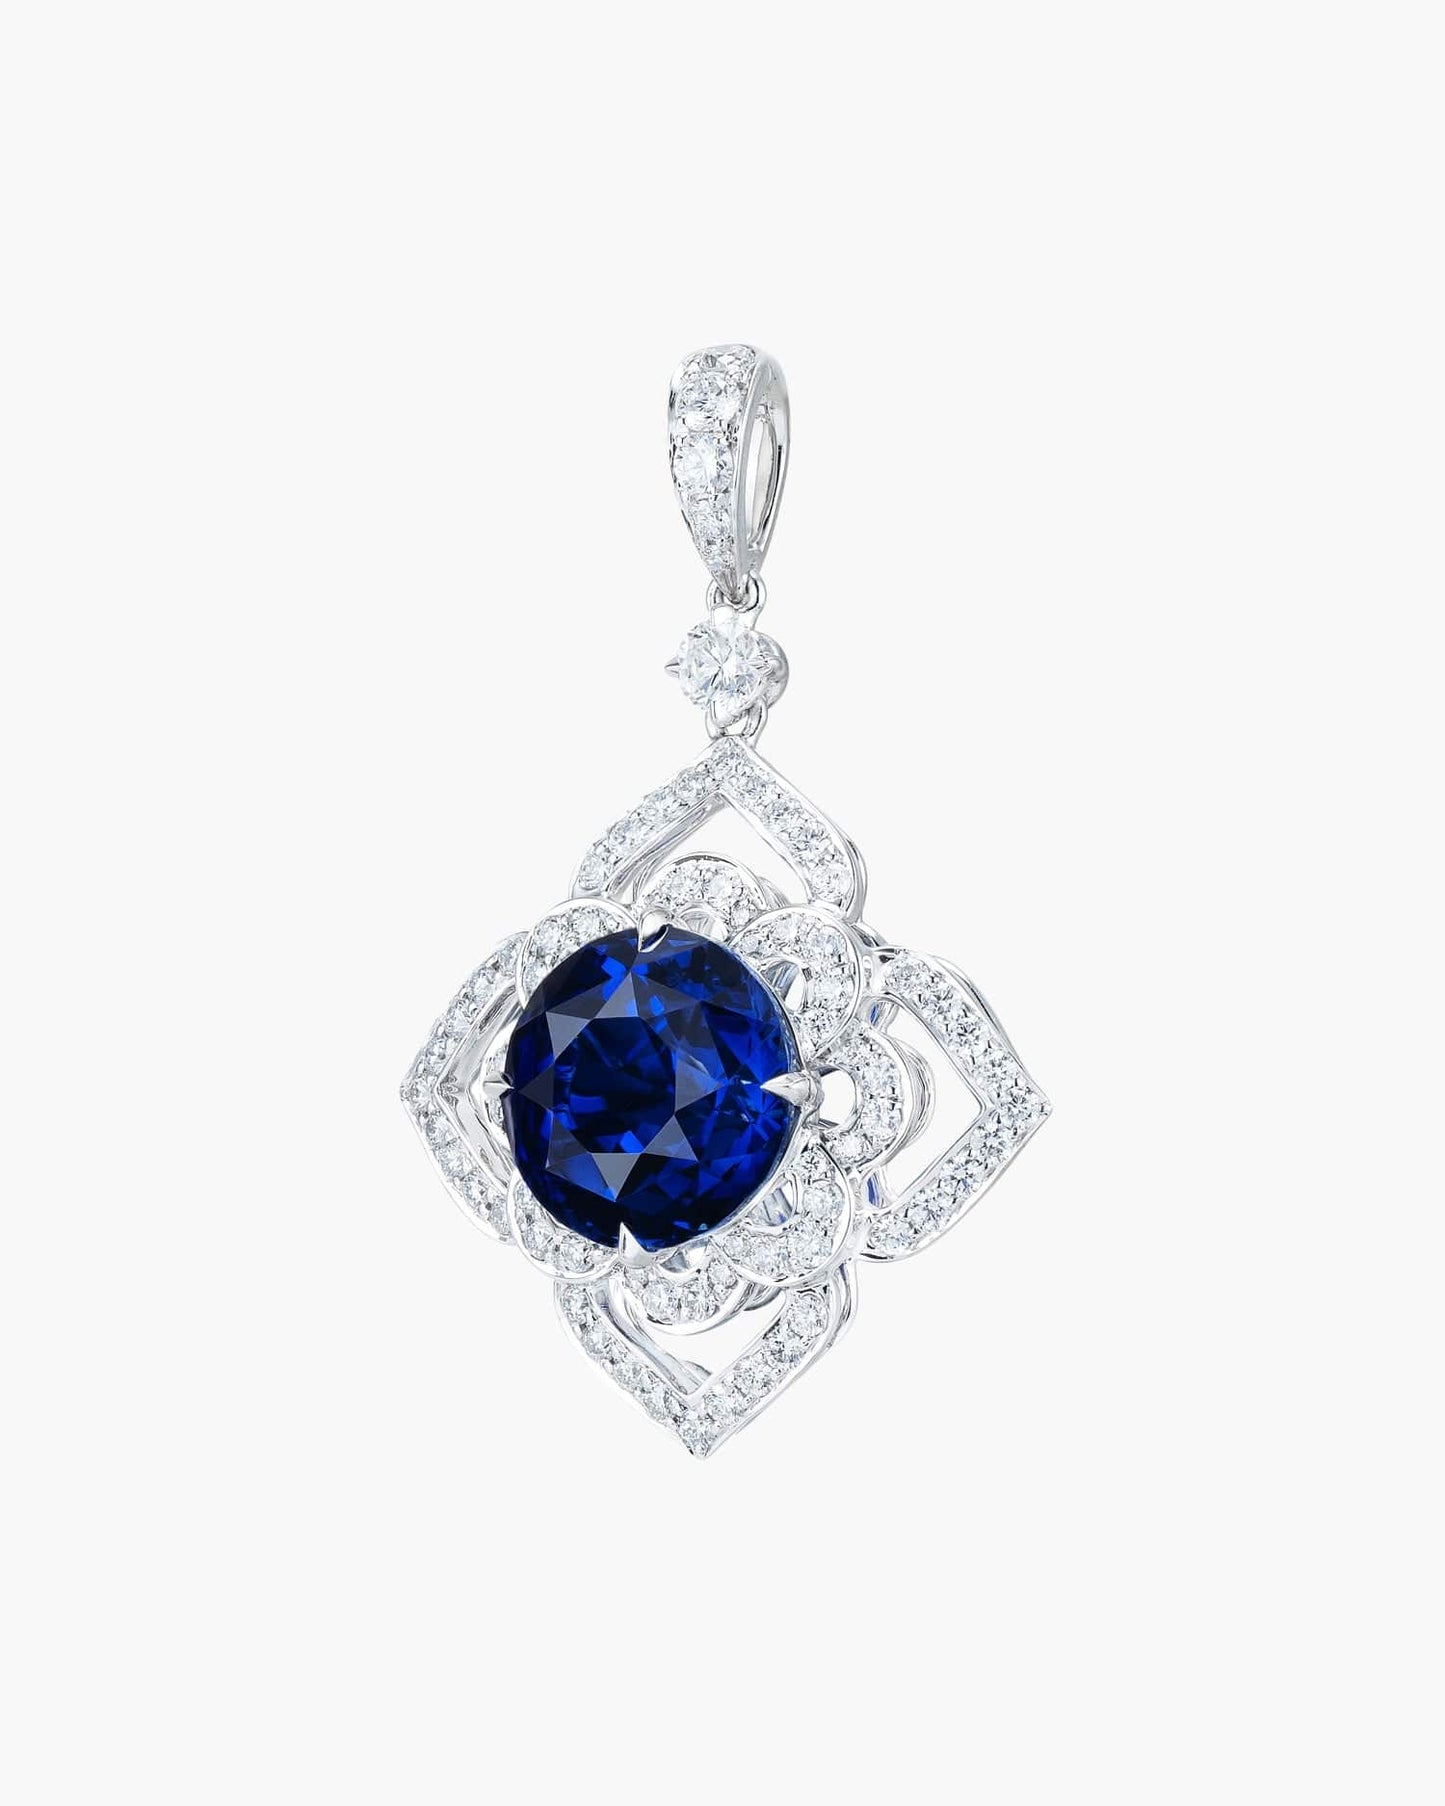 4.49 carat Round Cut Ceylon Sapphire and Diamond Lotus Pendant Necklace